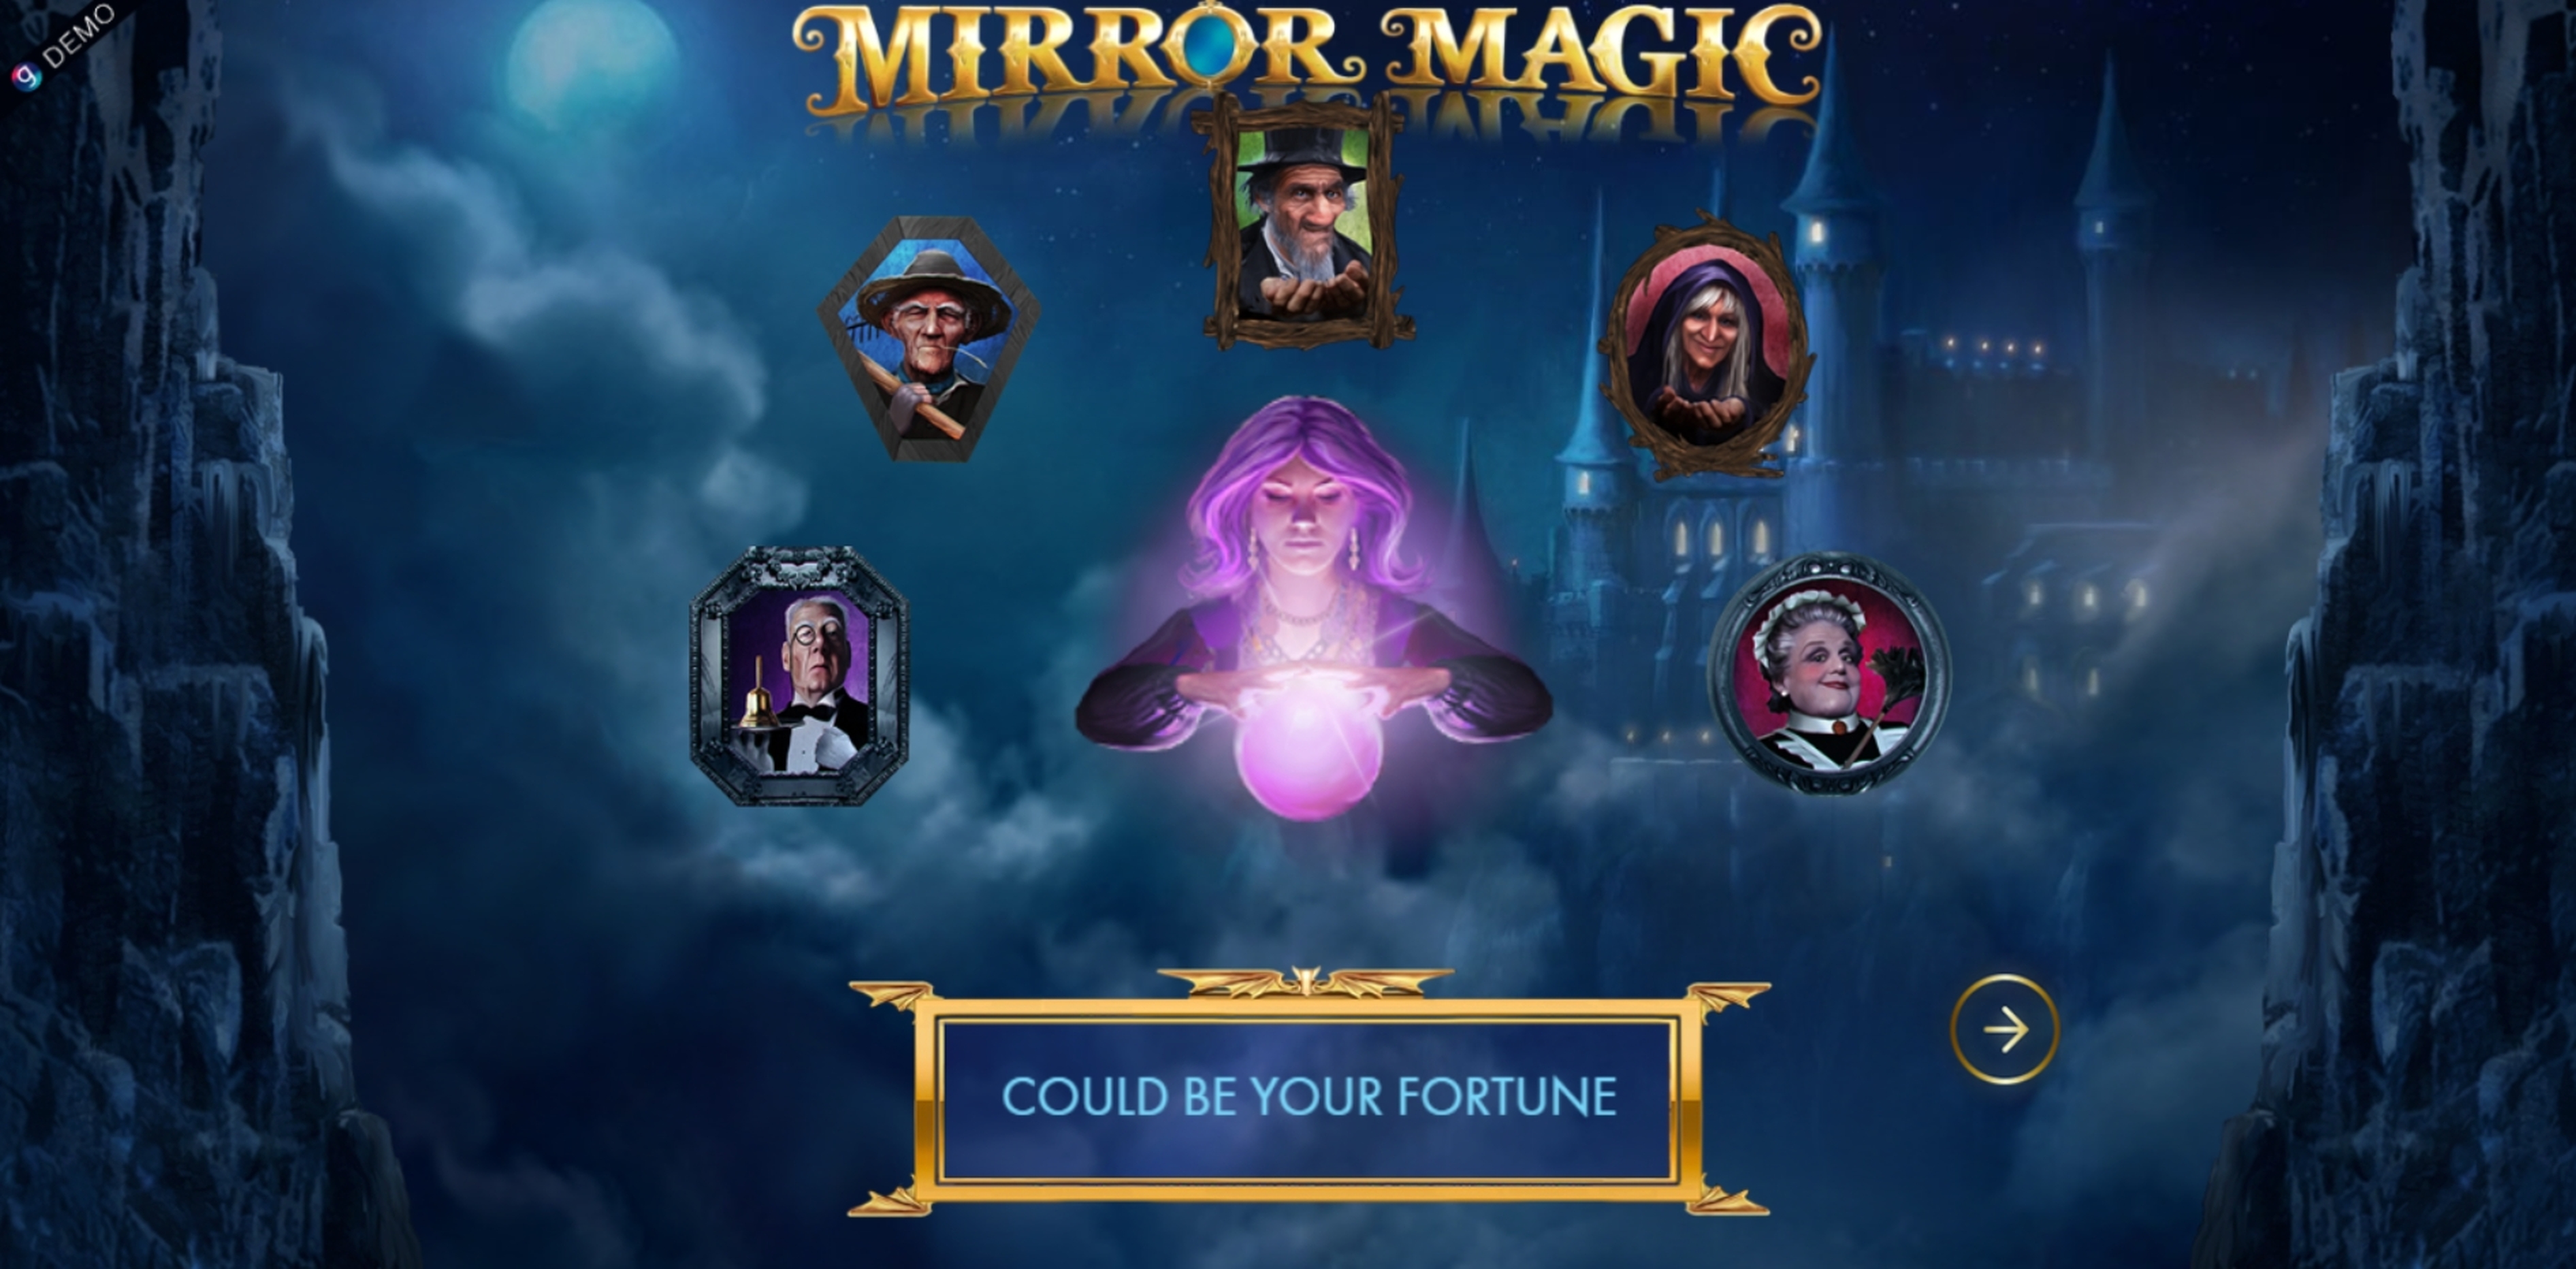 Play Mirror Magic Free Casino Slot Game by Genesis Gaming